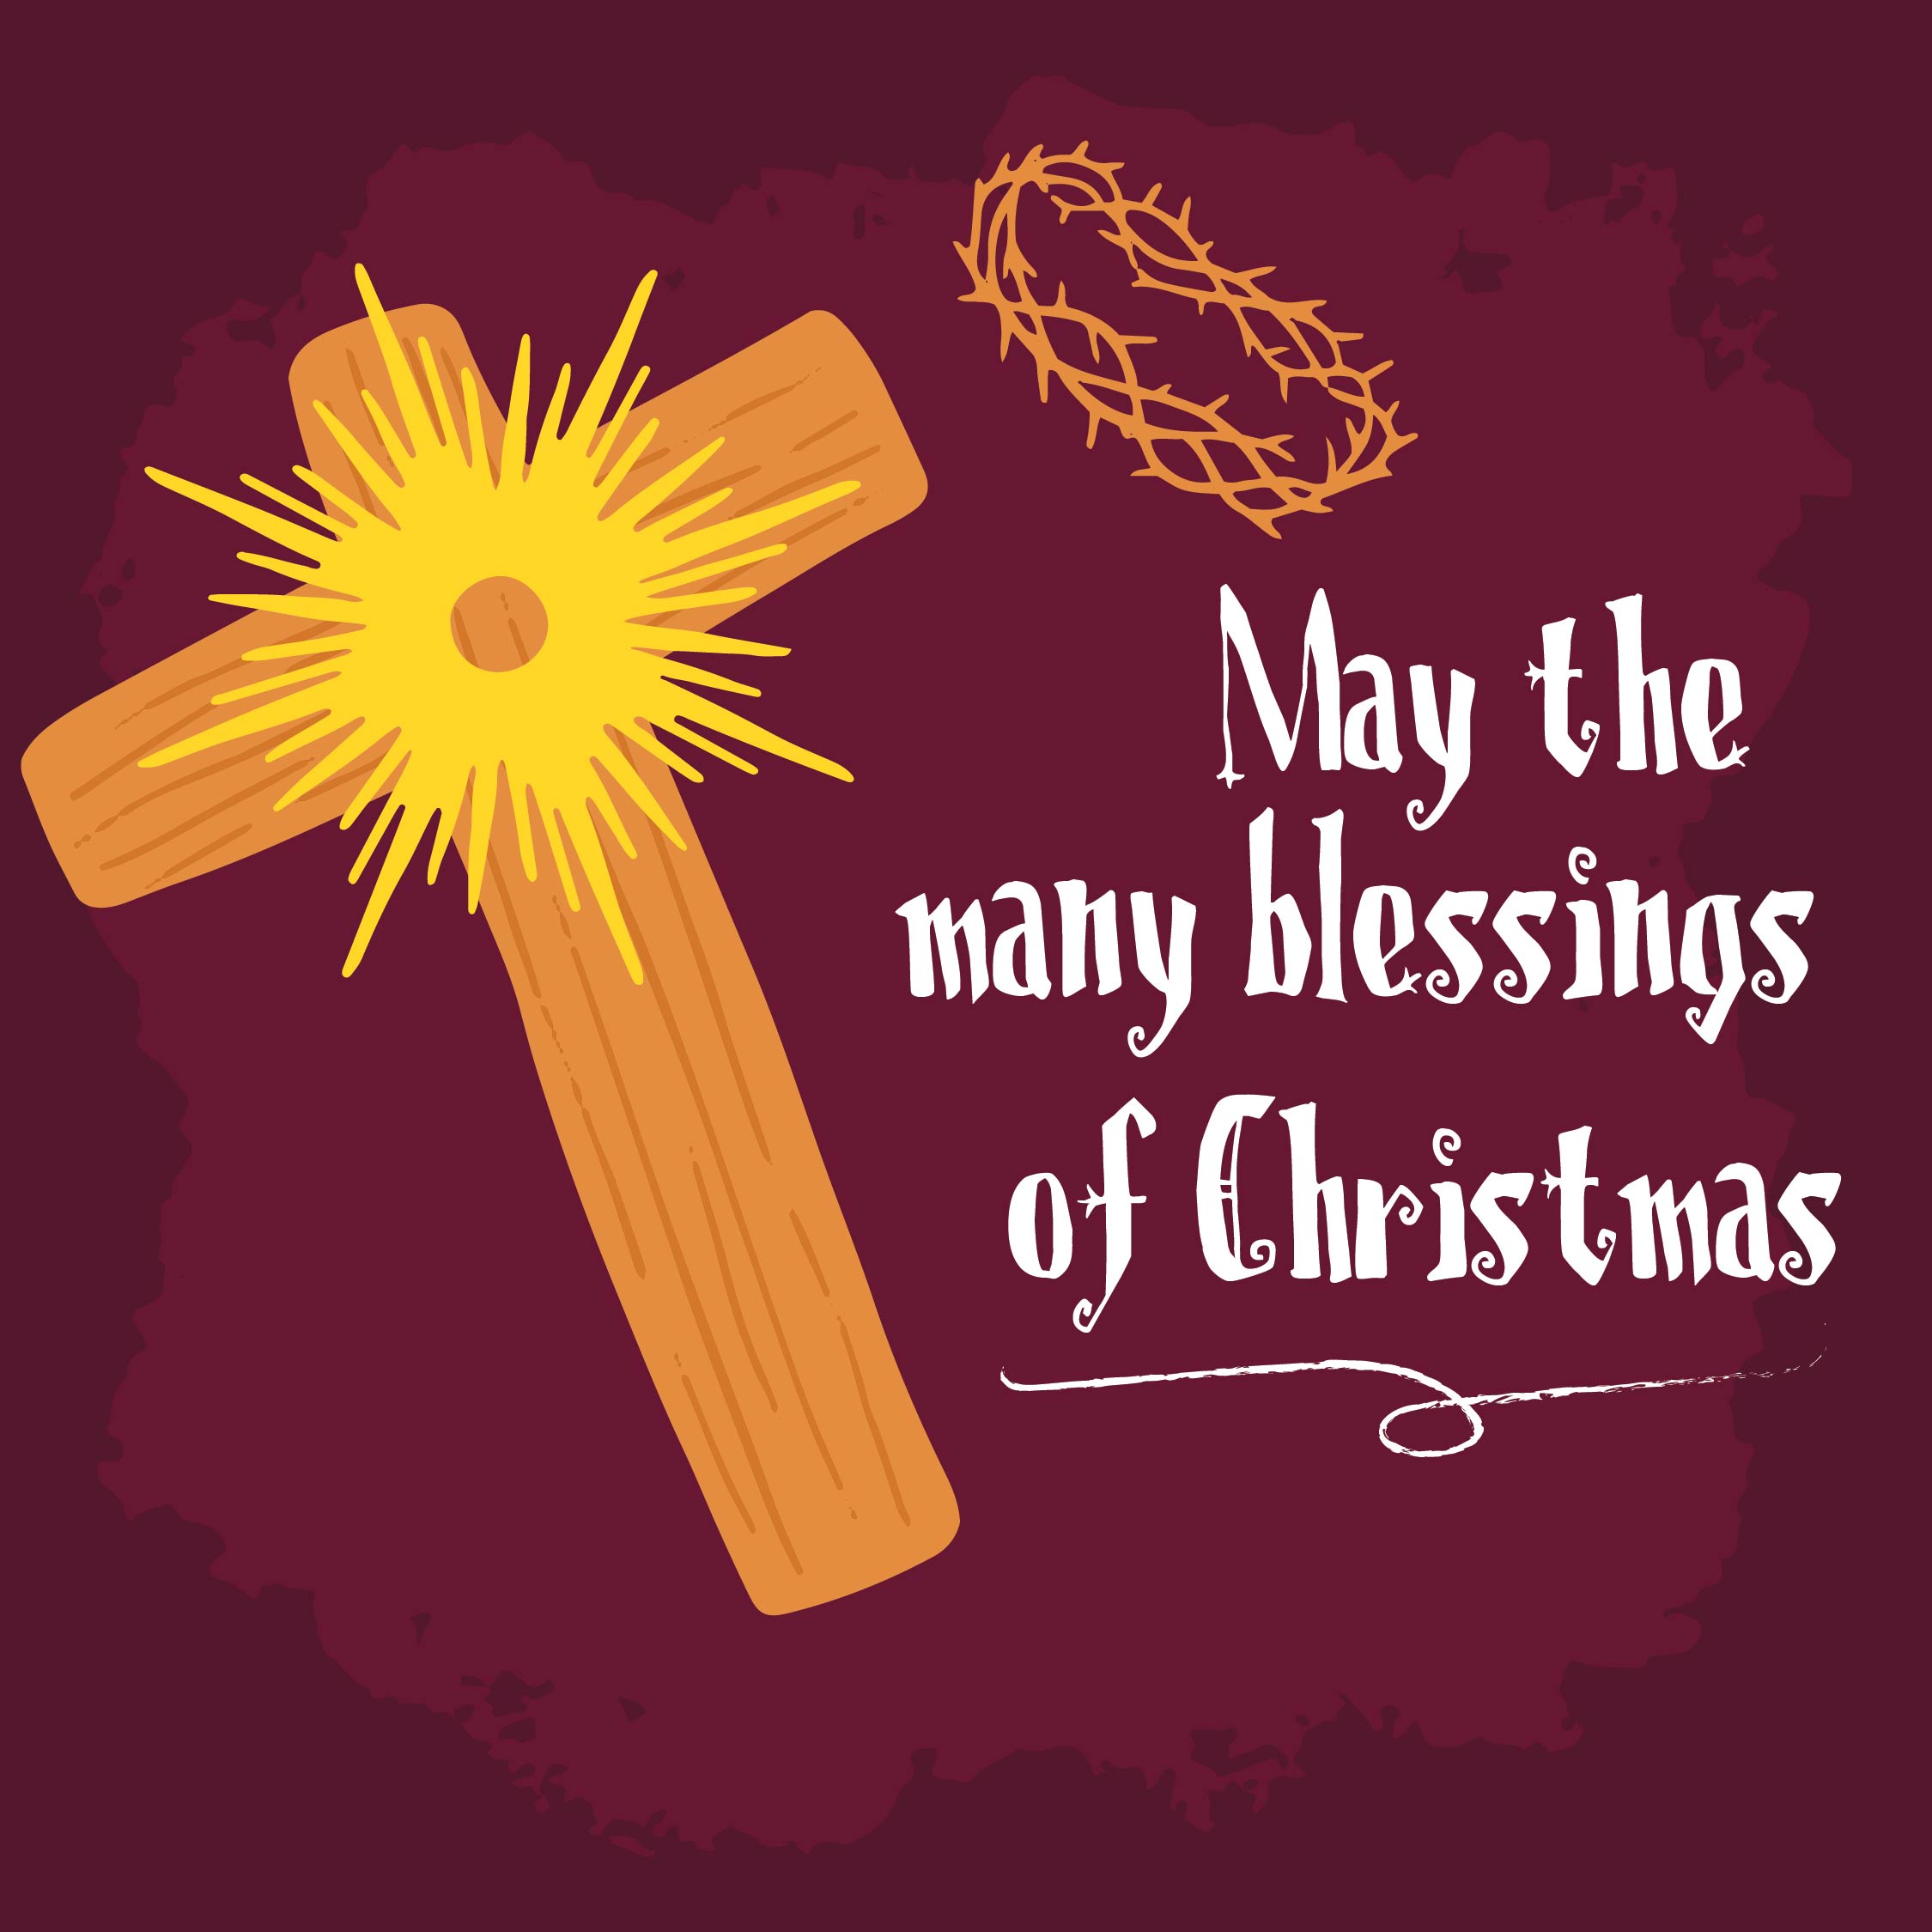 Religious Christmas Greeting Cards